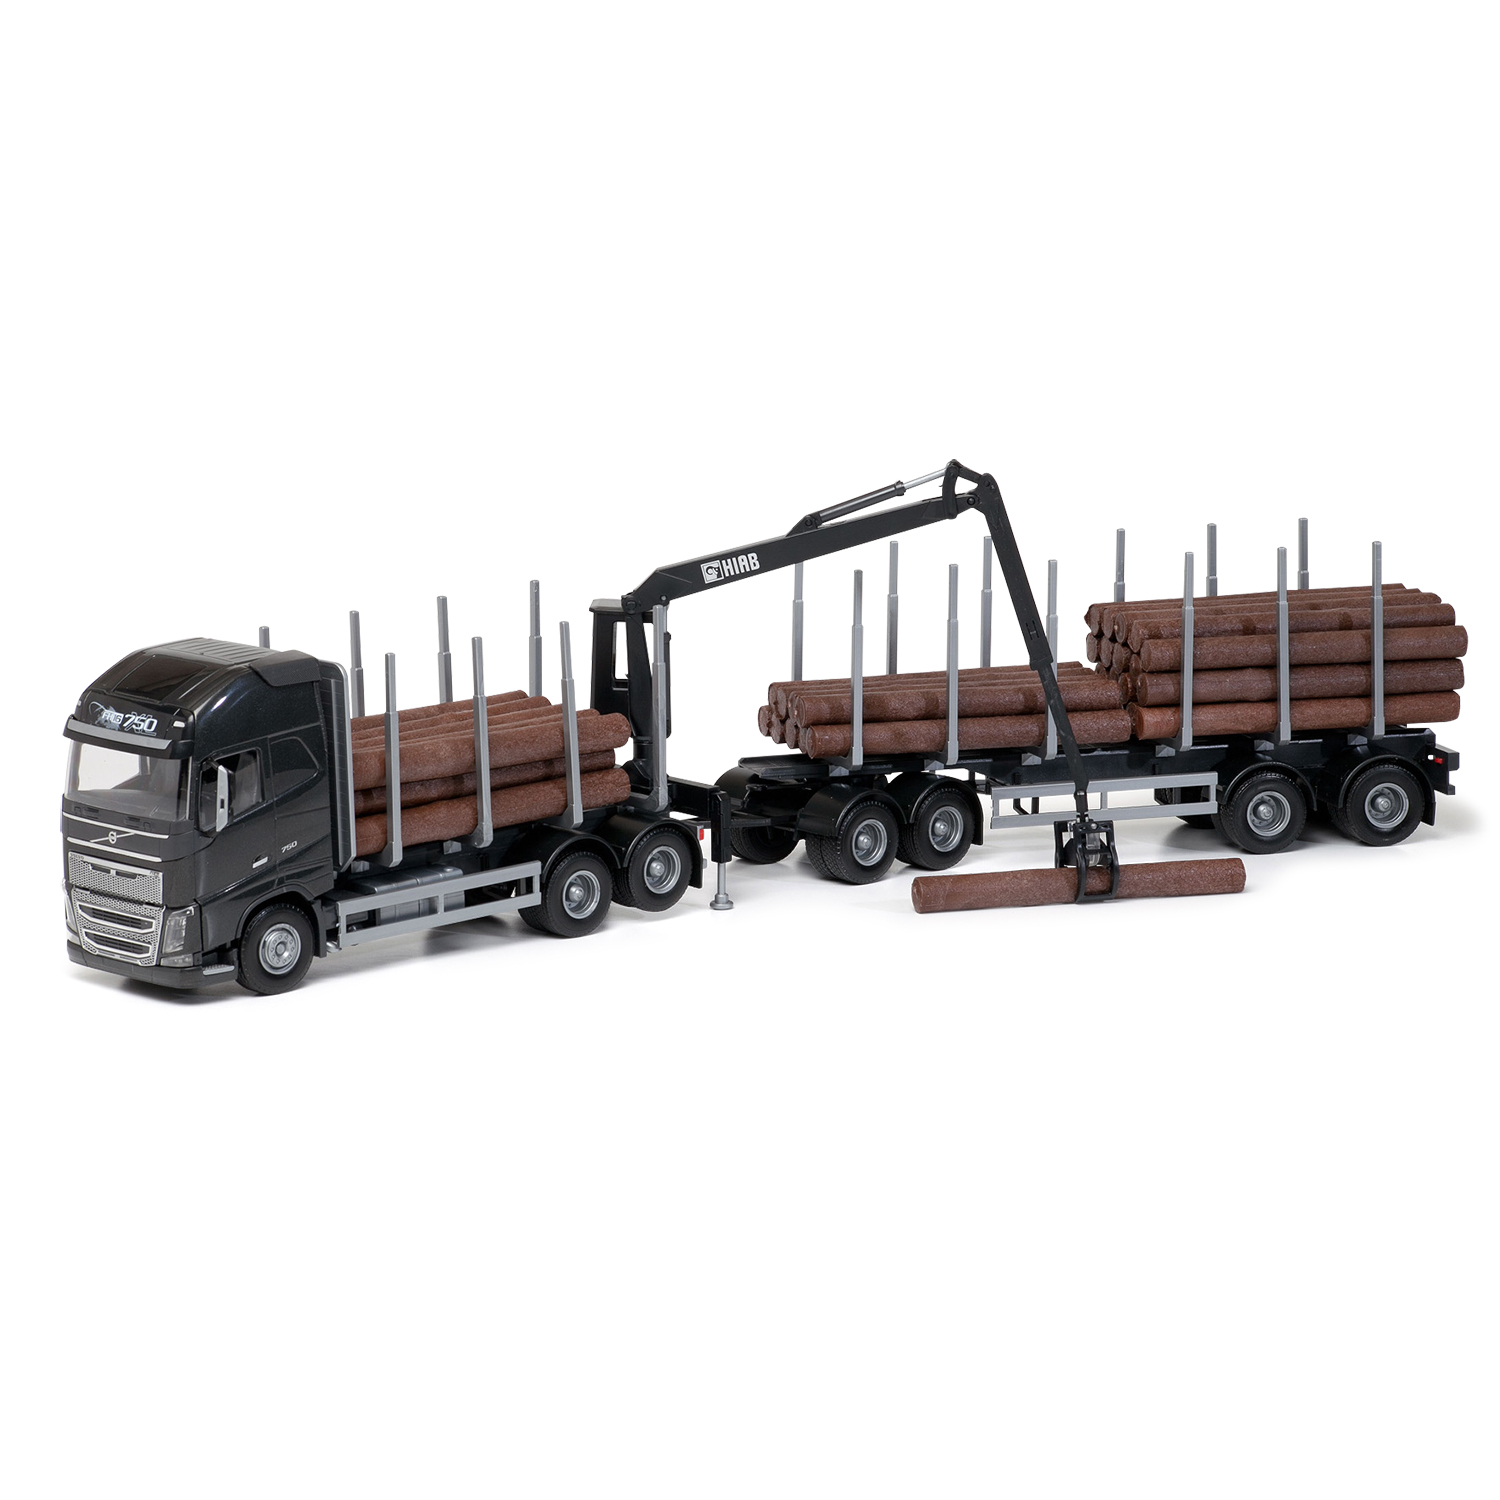 Työajoneuvot emek toy car timber truck volvo fh16/750 black 1:25